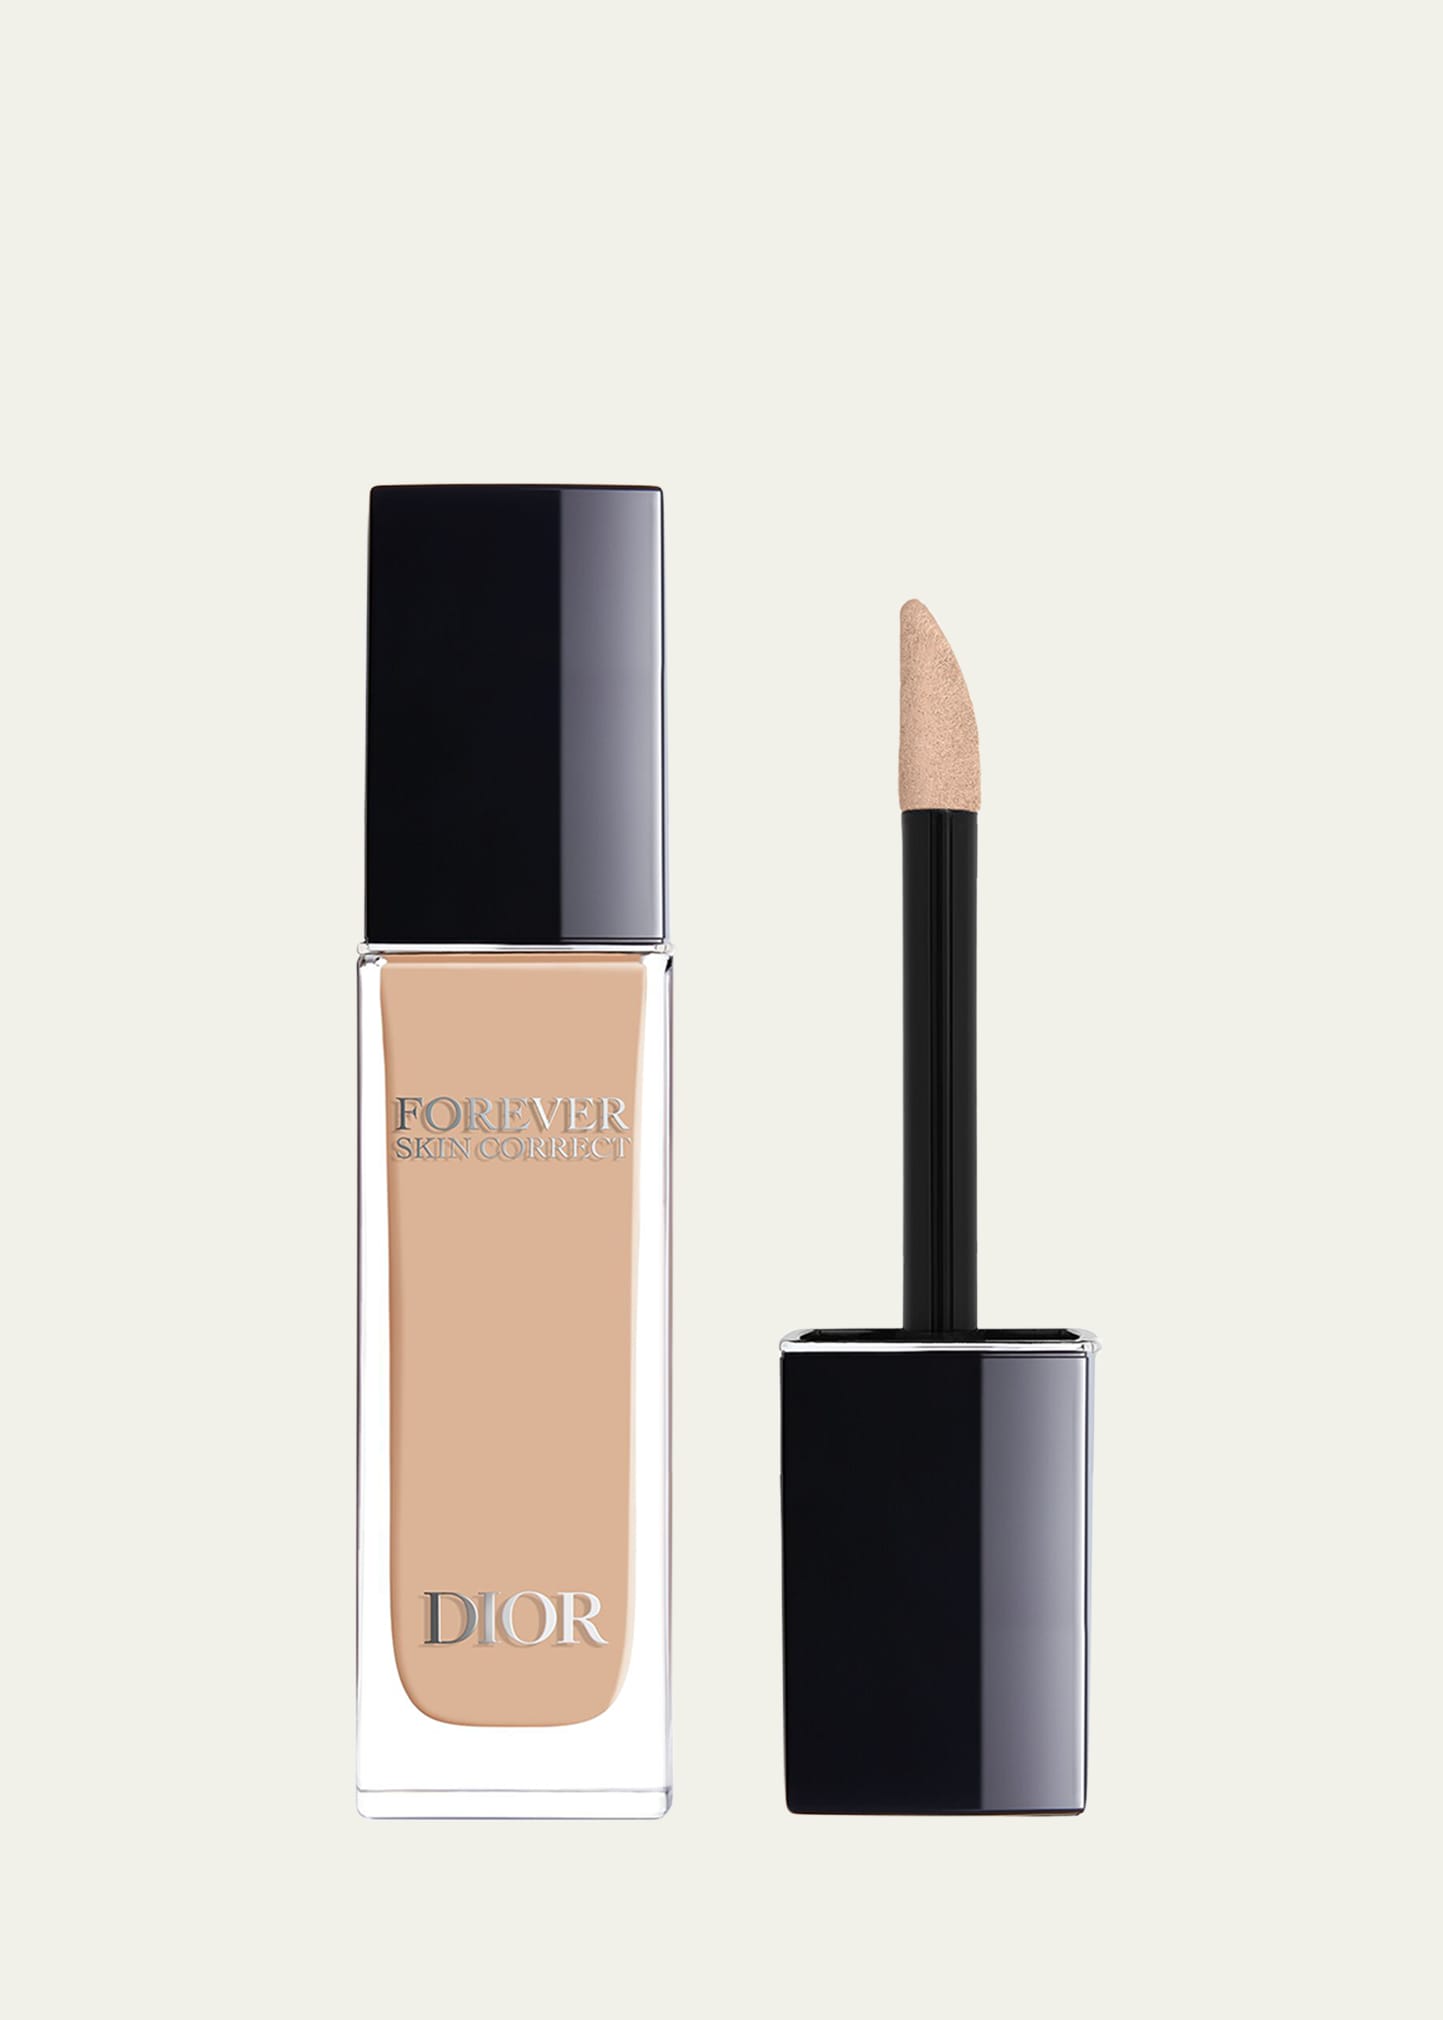 Dior Forever Skin Correct Full-coverage Concealer In 3 C Cool